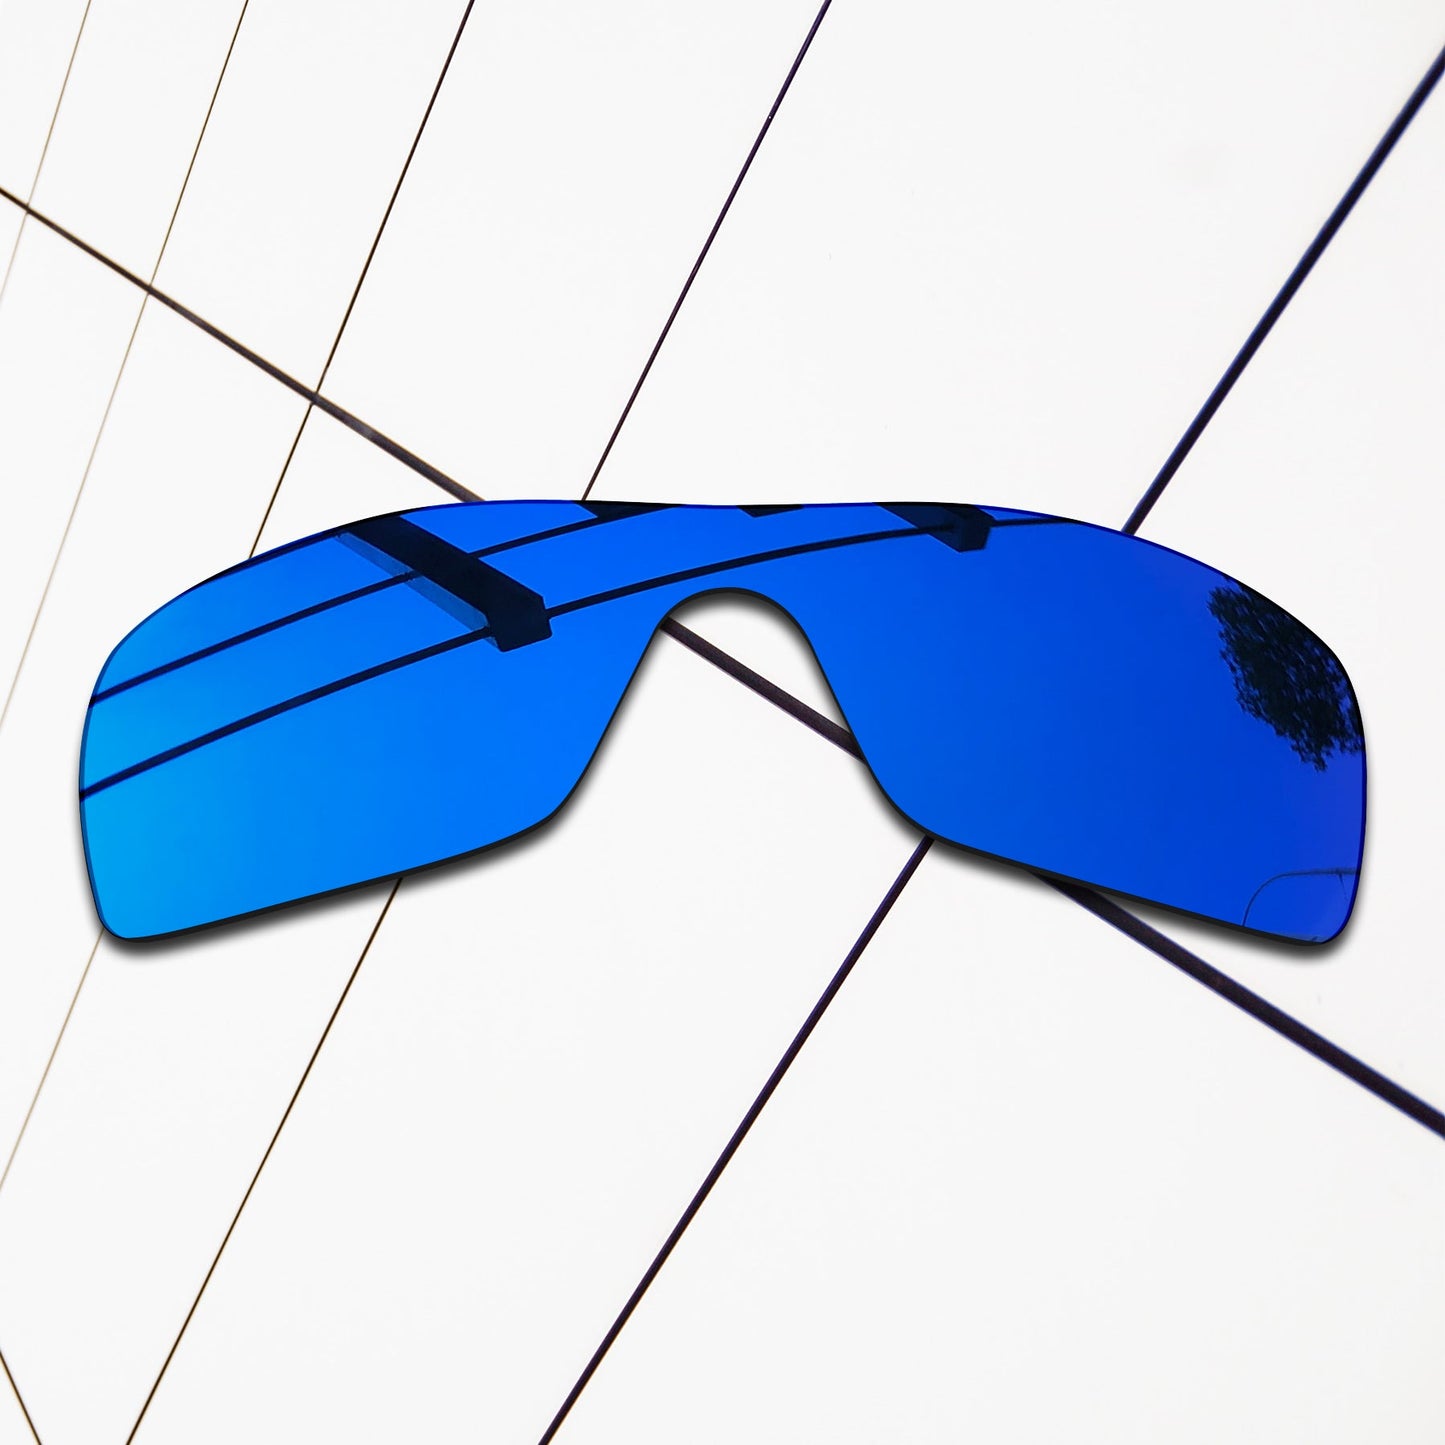 Polarized Replacement Lenses for Oakley Ridgeline Sunglasses